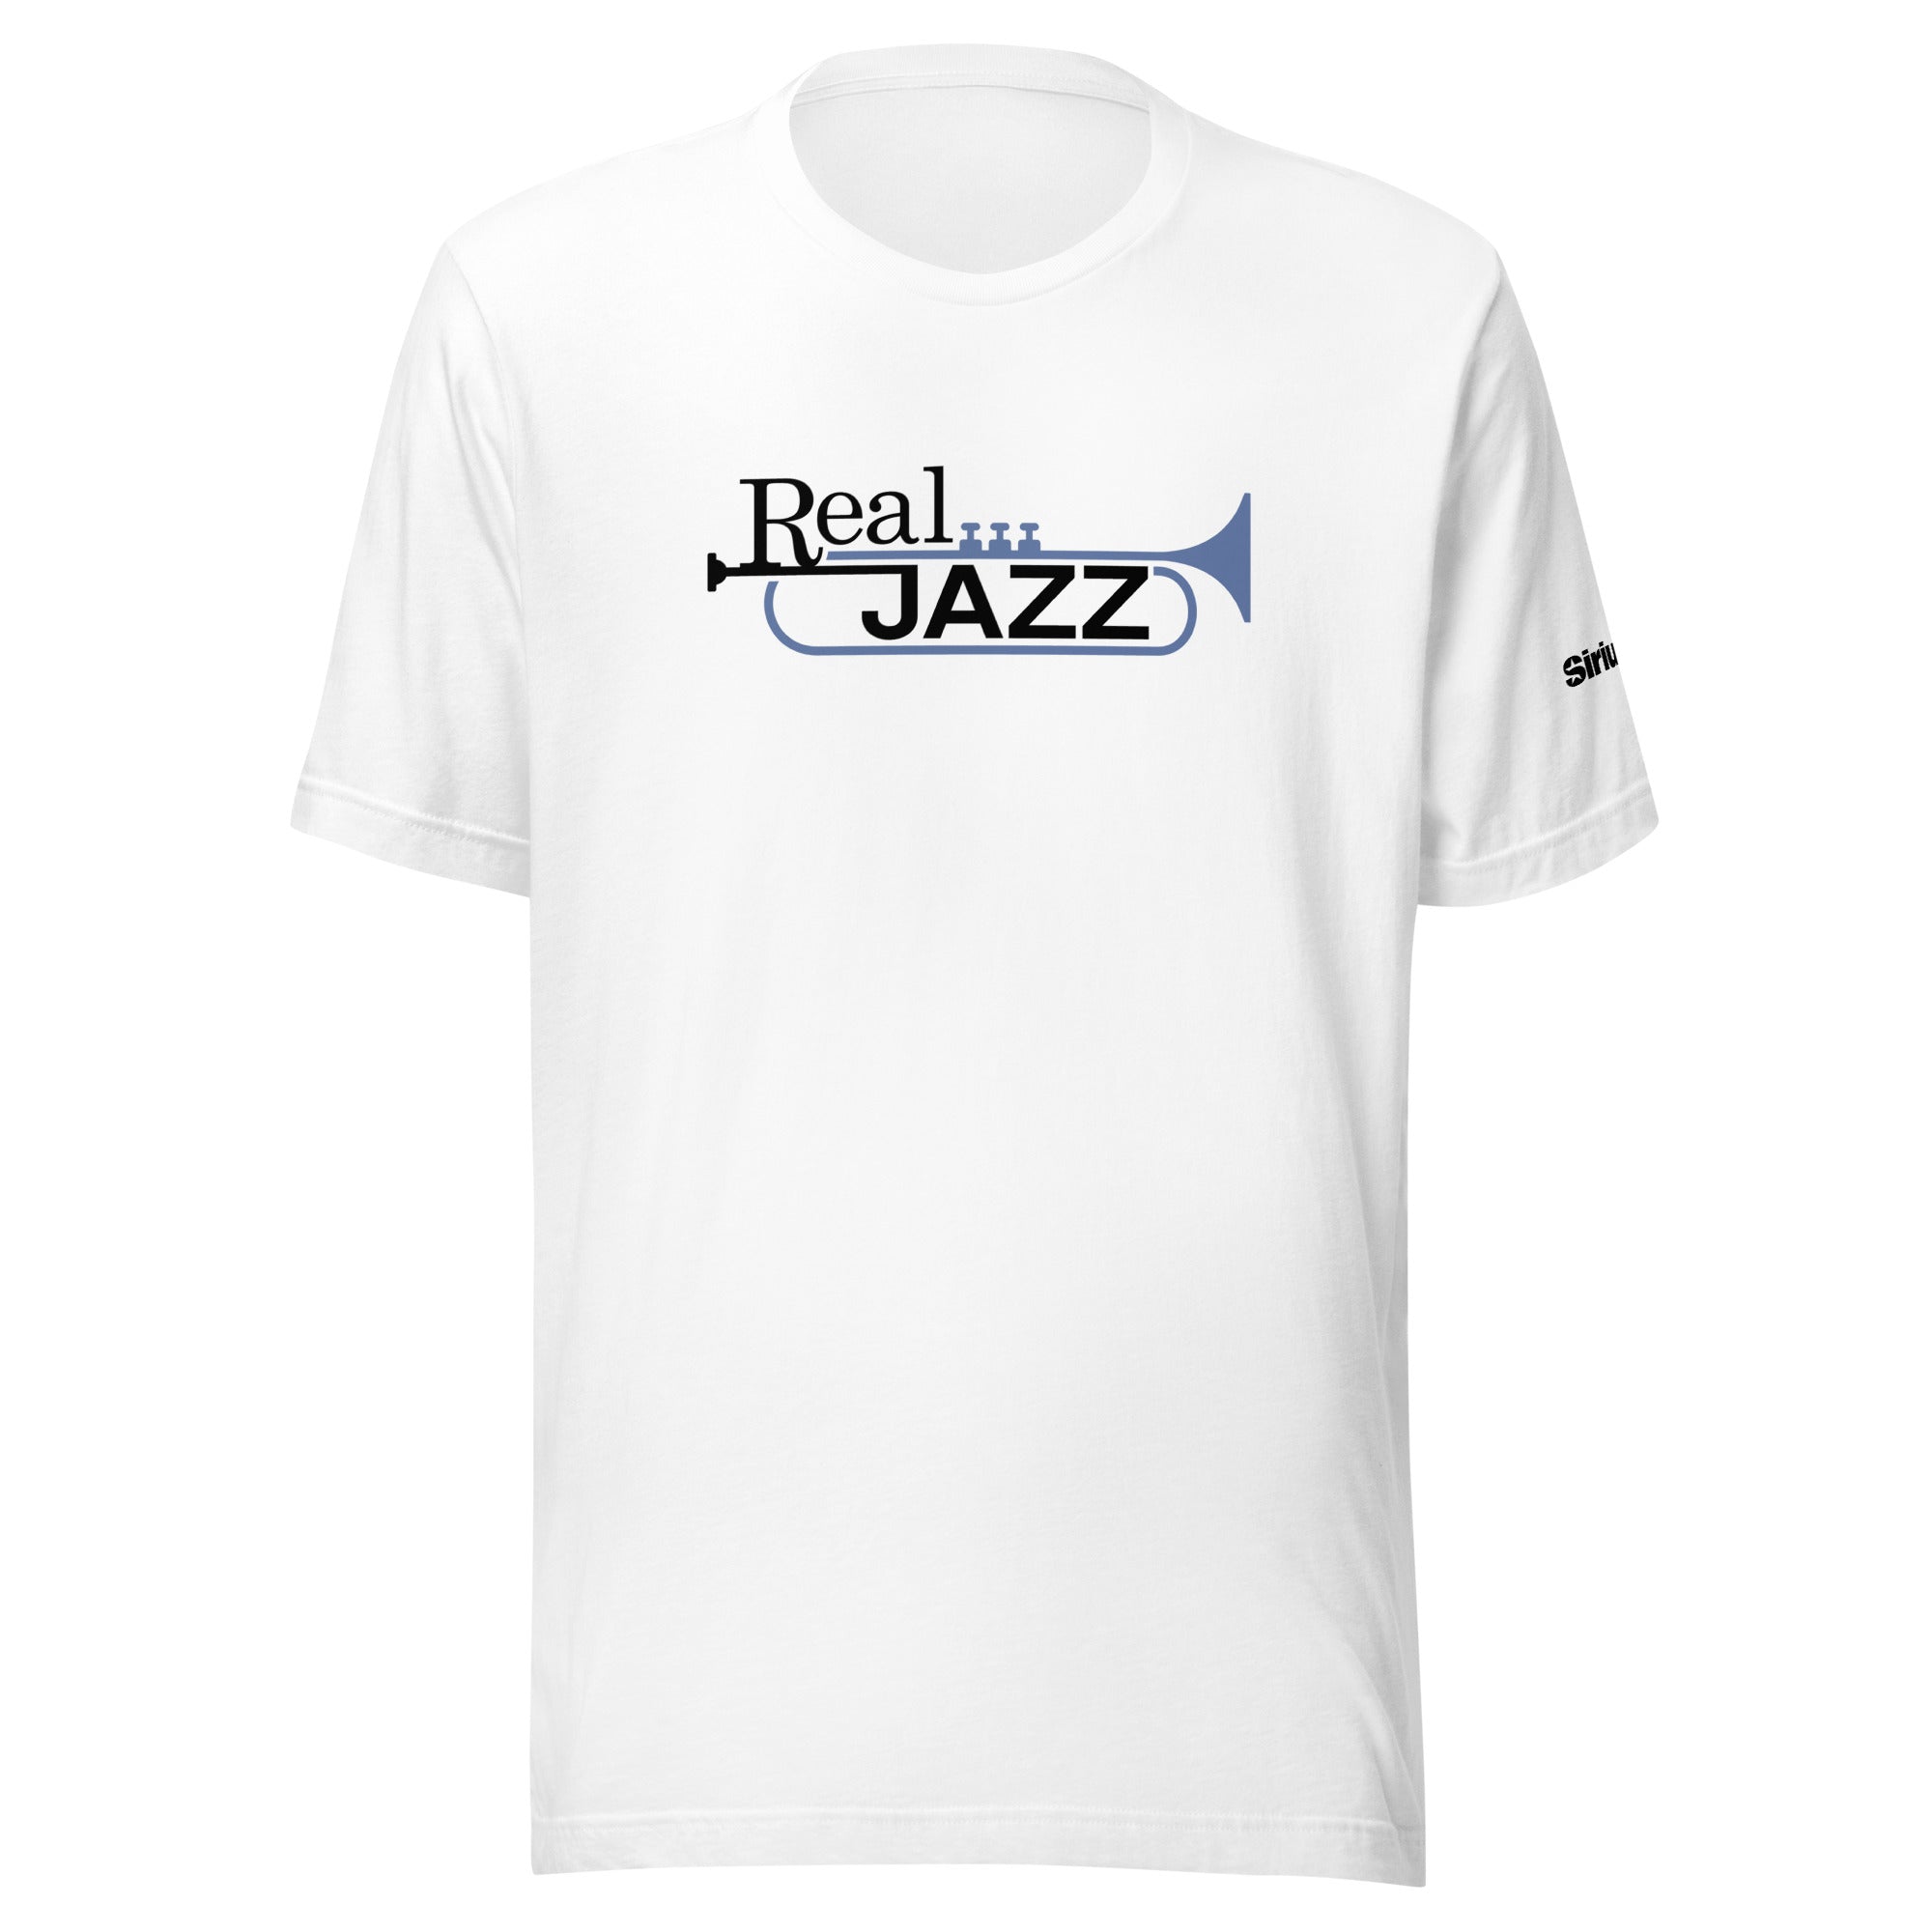 Real Jazz: T-shirt (White)